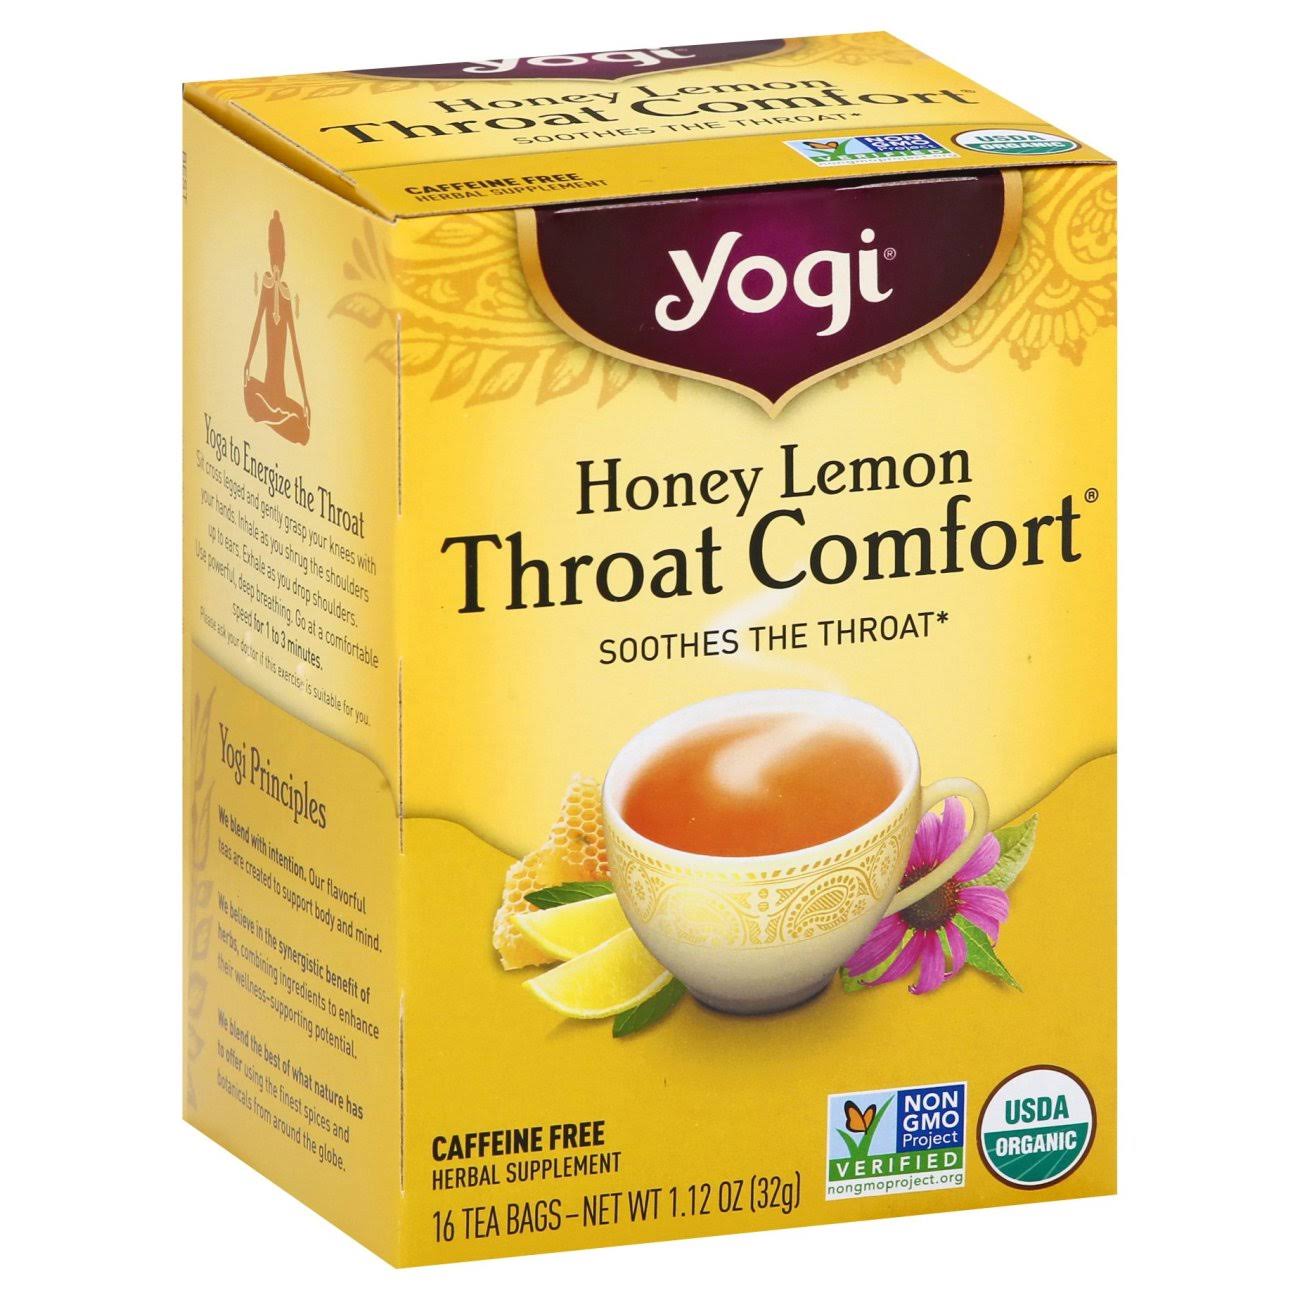 Yogi Honey Lemon Throat Comfort Tea - 16 Tea Bags